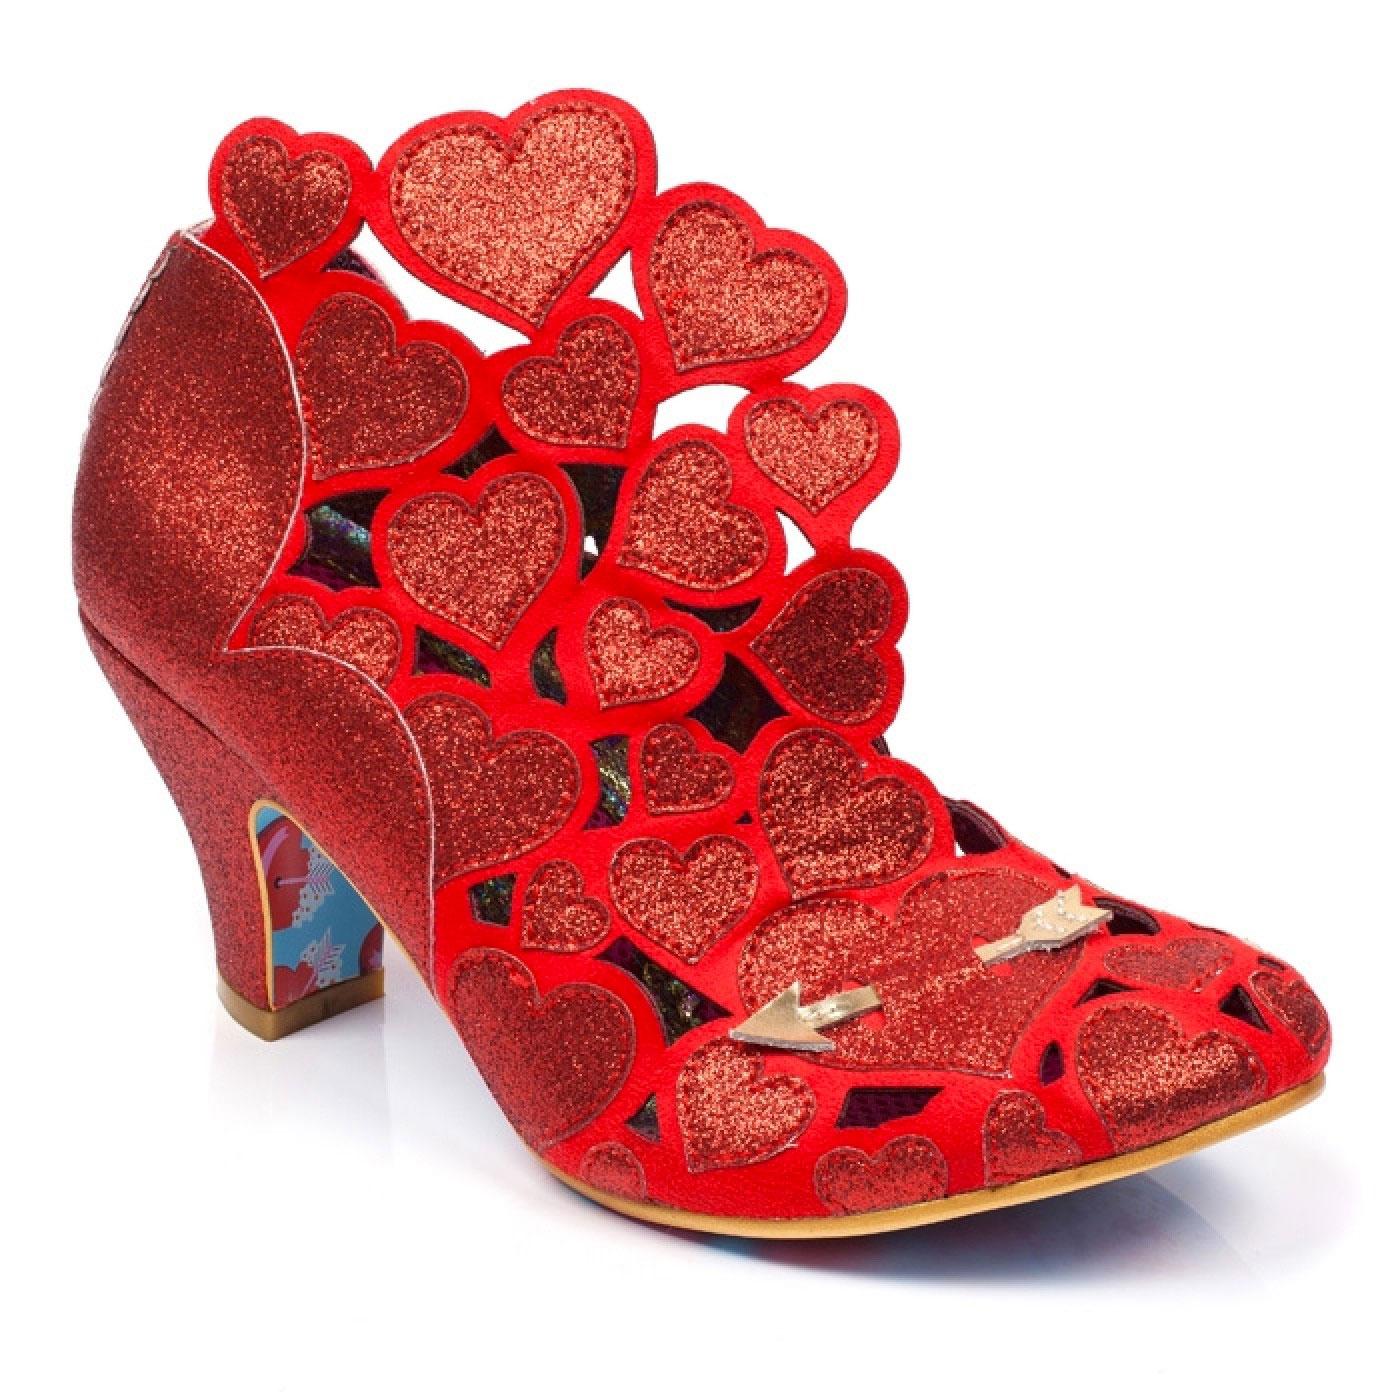 Meile IRREGULAR CHOICE Sweetheart Shoe-Boots R